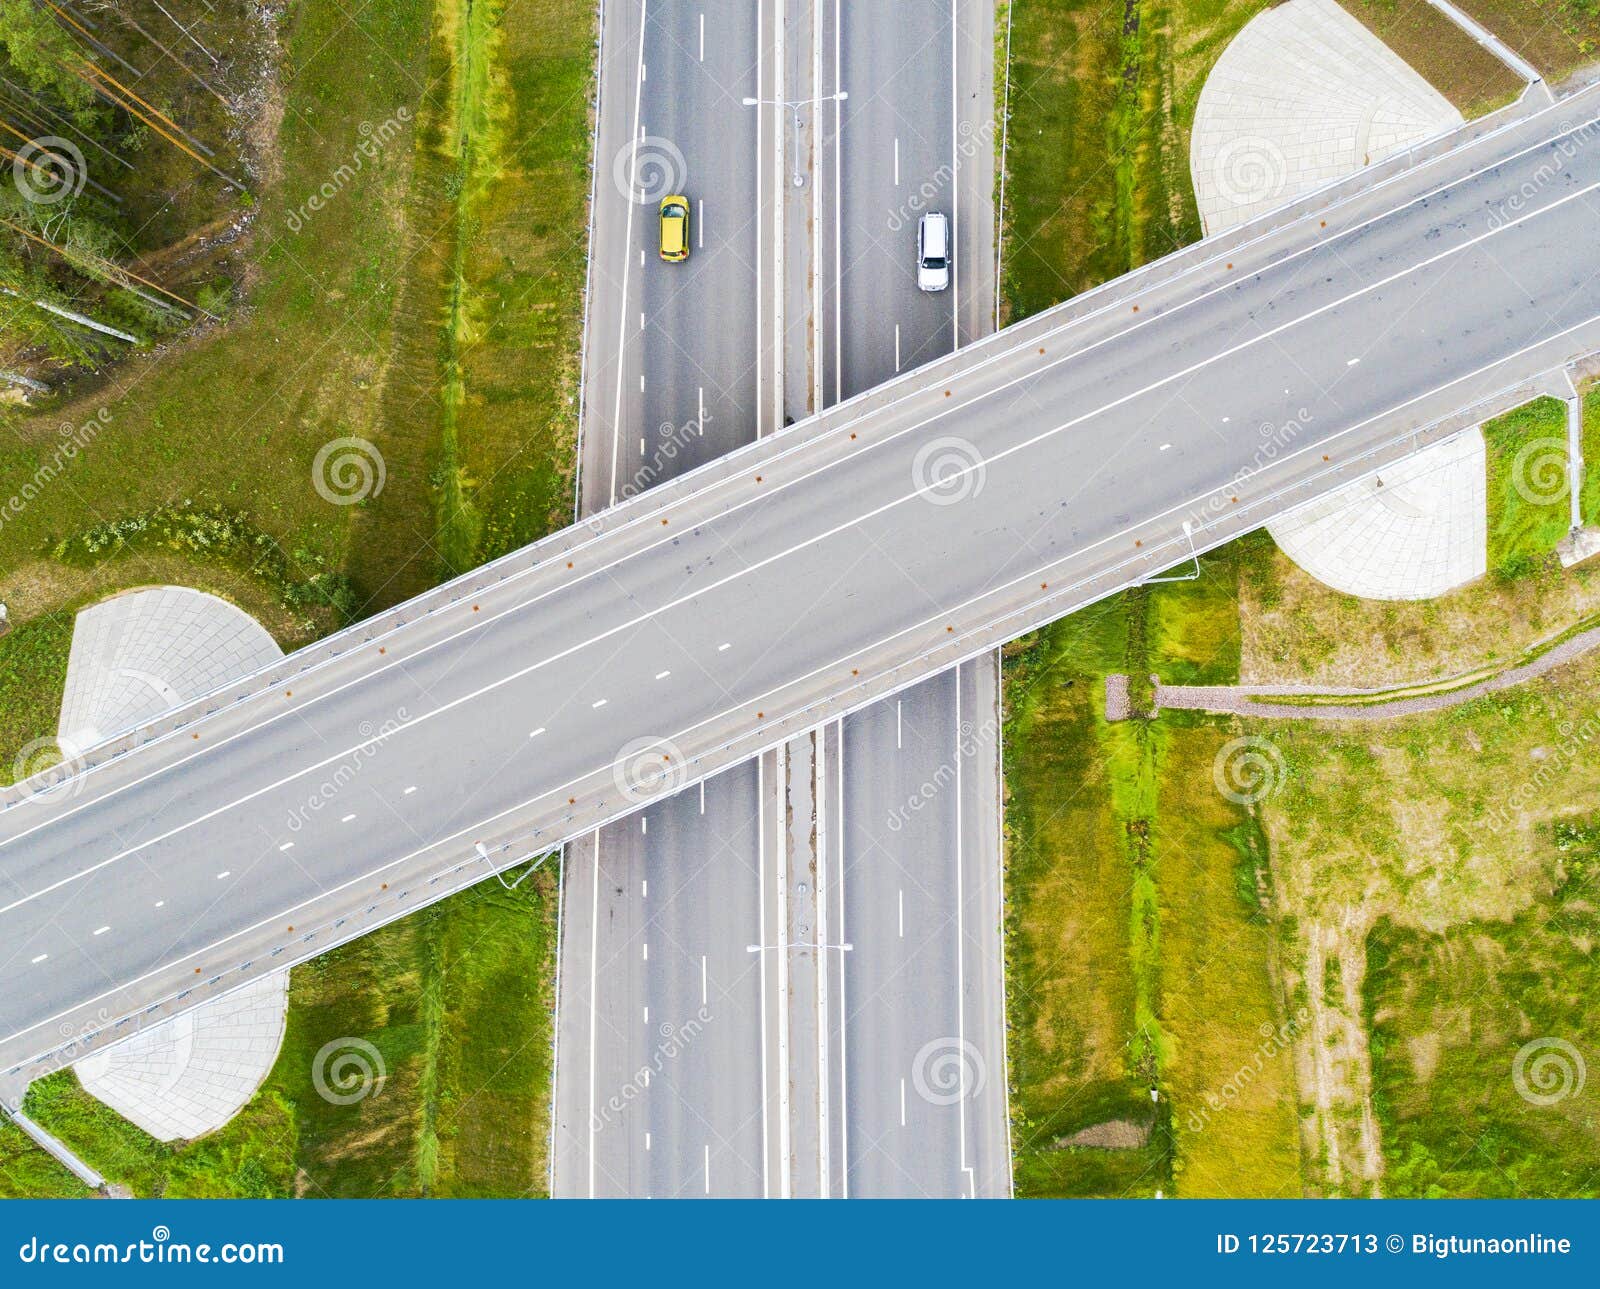 Aerial View of Highway in City. Cars Crossing Interchange Overpass ...